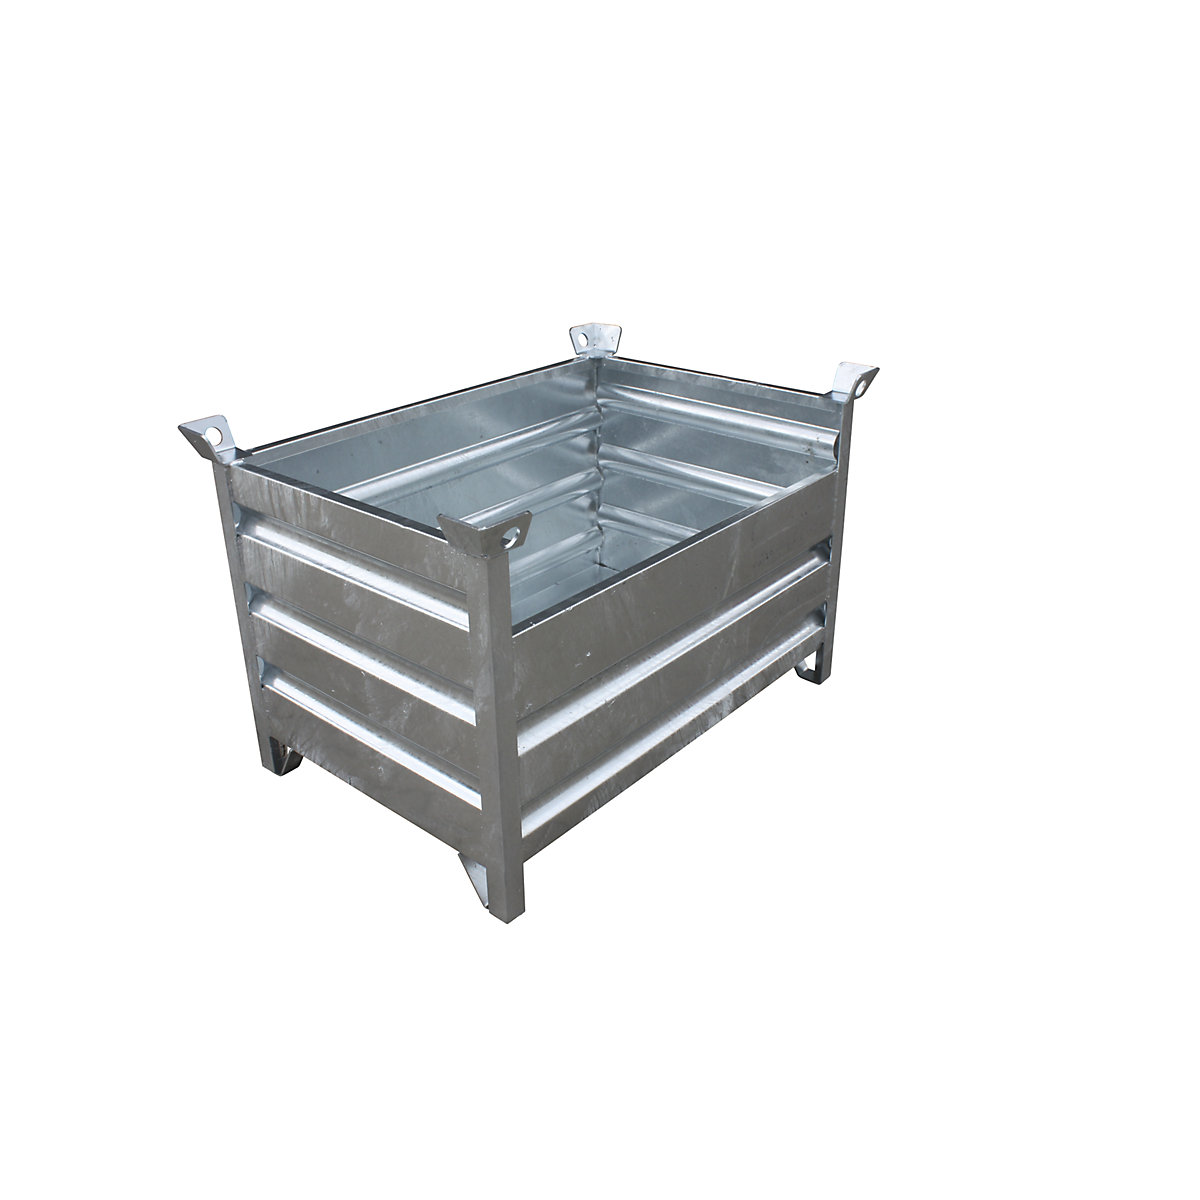 Solid panel box pallet – Eichinger, LxWxH 1500 x 800 x 750 mm, zinc plated-1